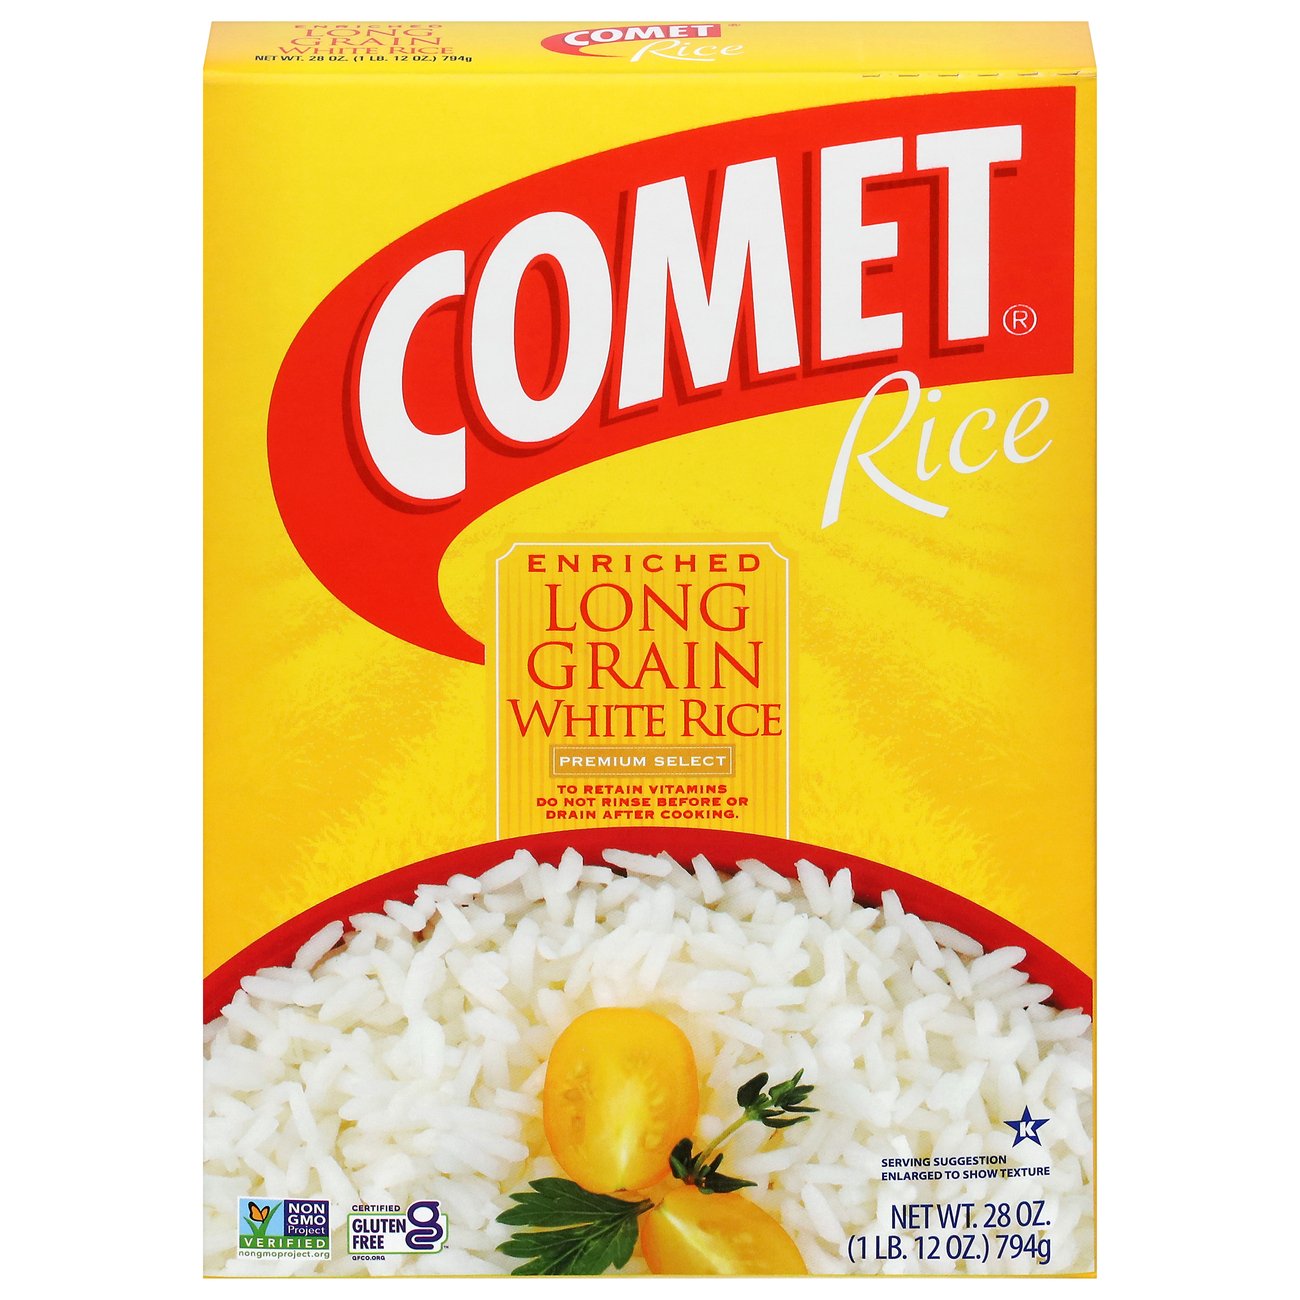 Comet Long Grain Rice Shop Rice Grains At H E B,Best Cordless Drill